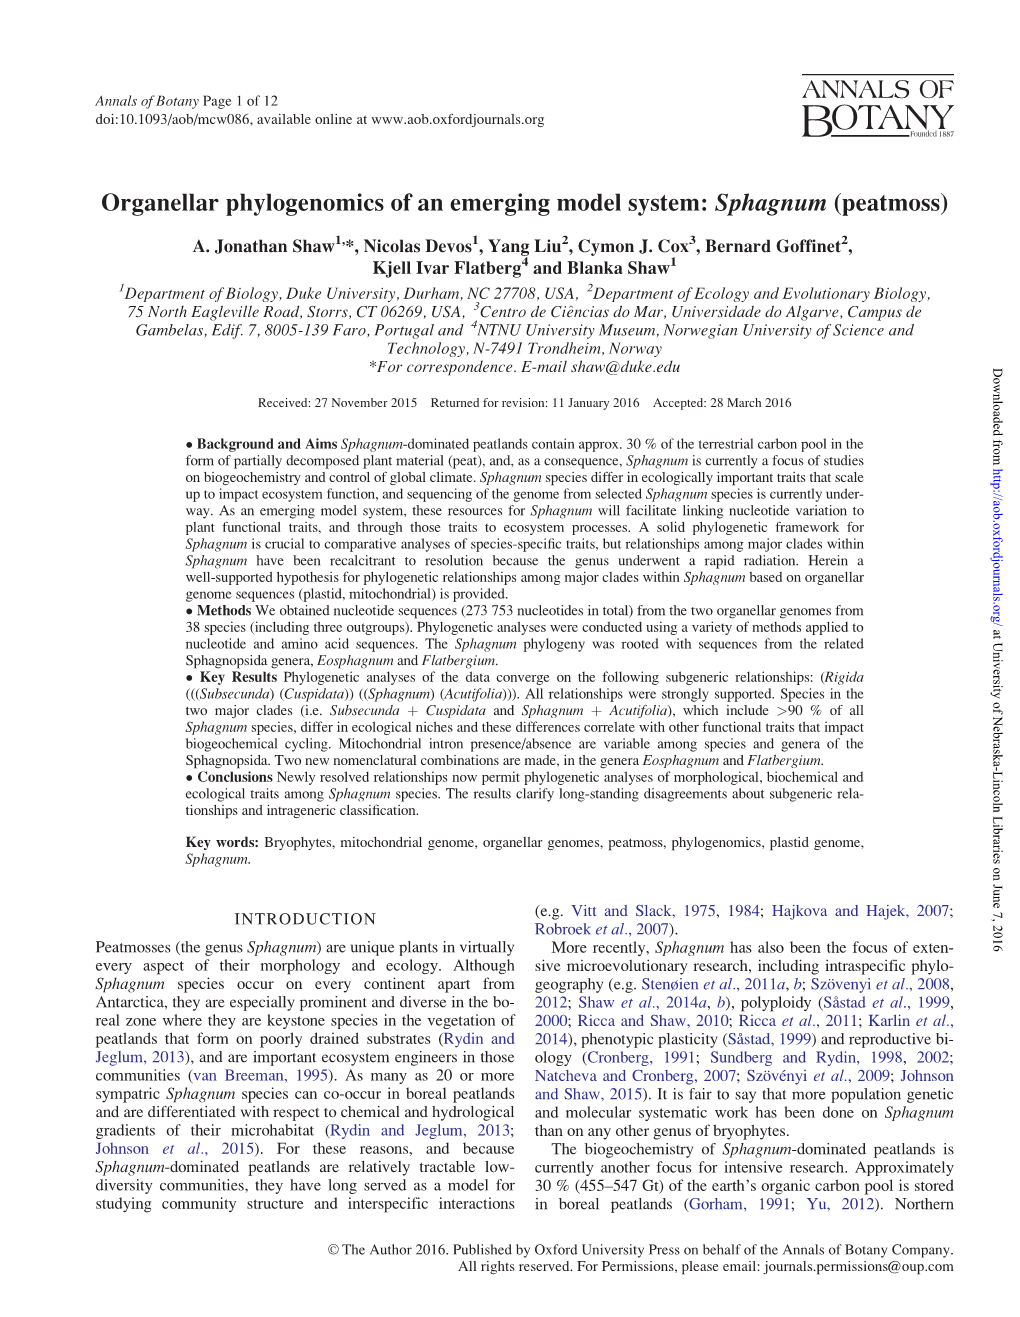 Organellar Phylogenomics of an Emerging Model System: Sphagnum (Peatmoss)